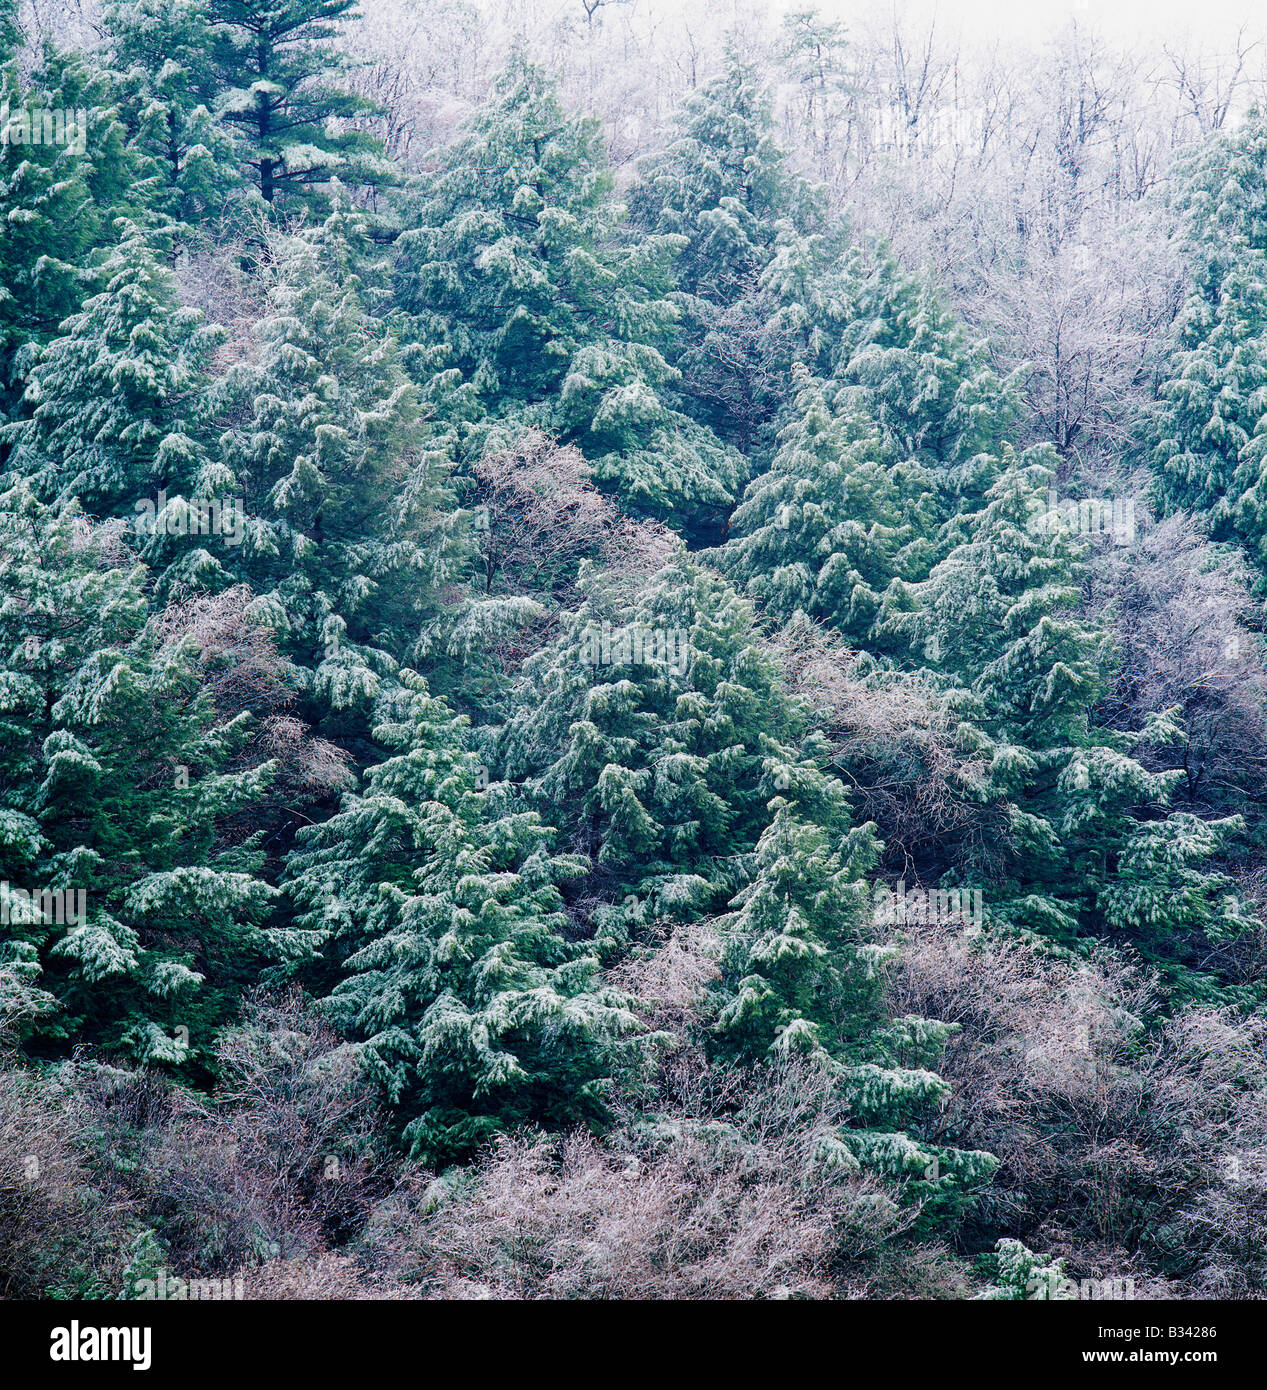 EASTERN HEMLOCK & HARDWOOD TREES UNDER WEIGHT OF WINTER SNOW, POCONO MOUNTAINS, PENNSYLVANIA, USA Stock Photo